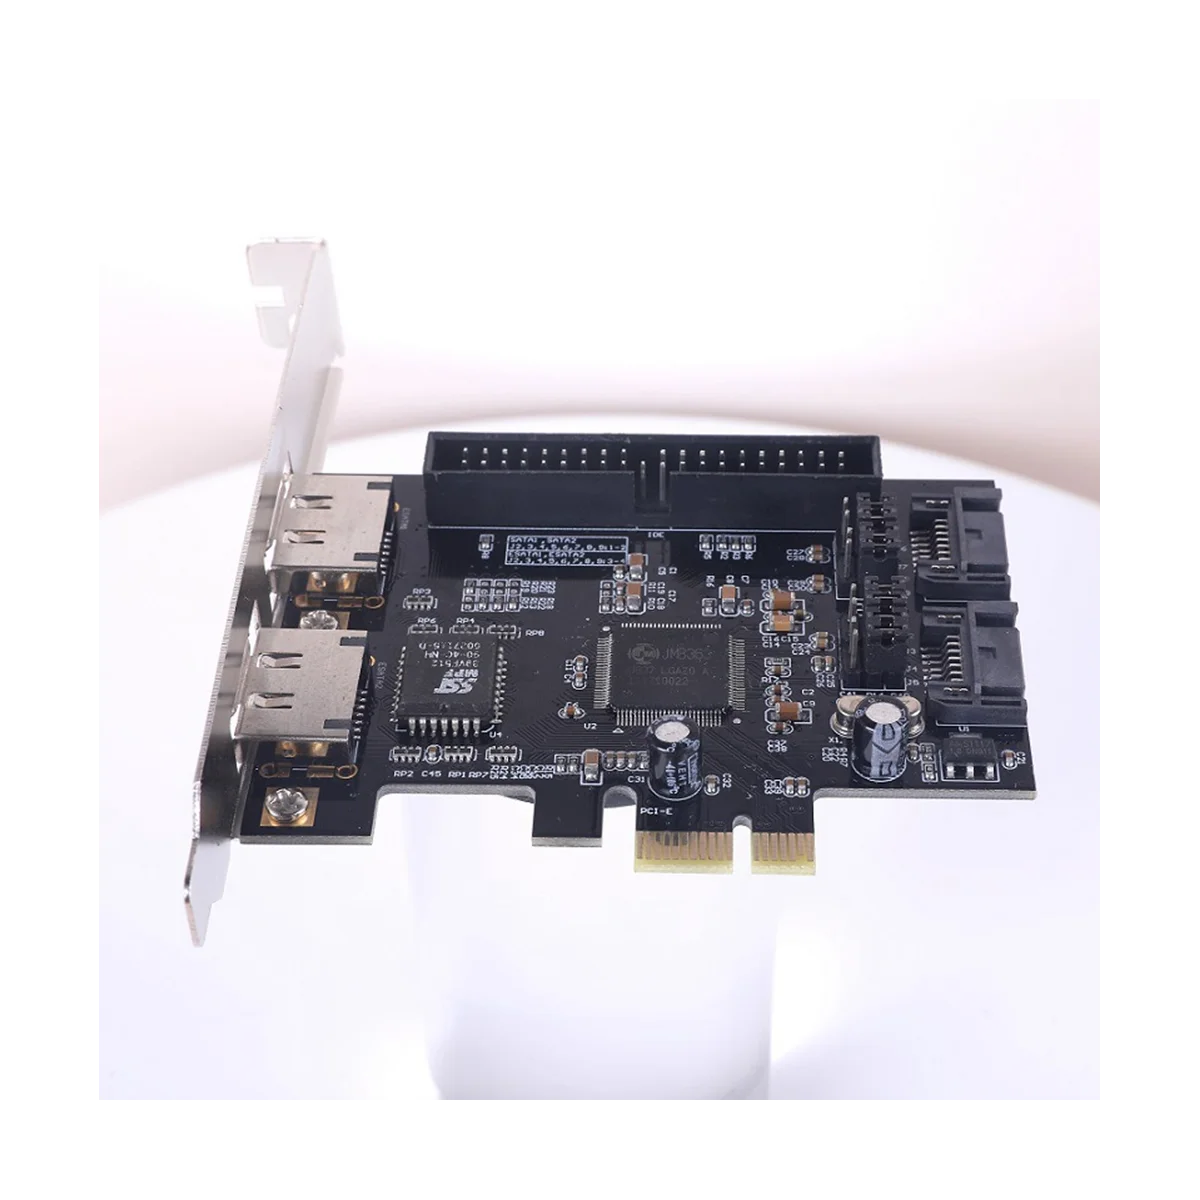 

SATA IDE PCI E адаптер карты PCI E к SATA 2,0 + IDE ESATA X2 комбинированный адаптер конвертер RAID контроллер карта